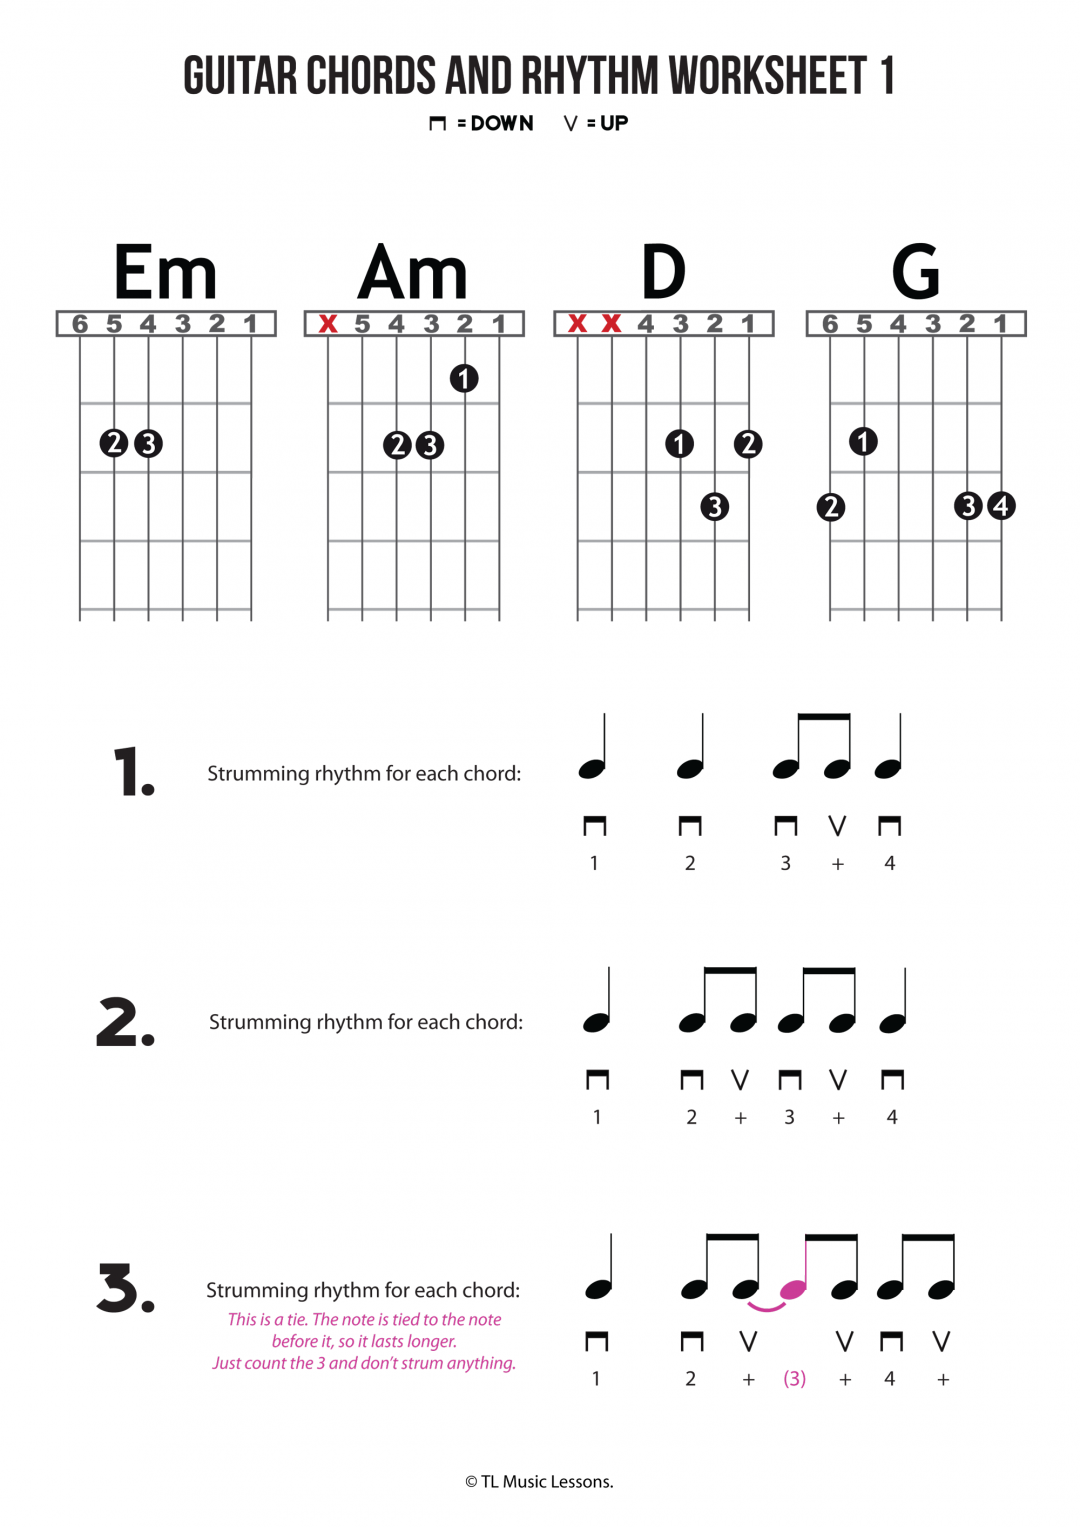 Guitar Chords and Rhythm Worksheet 1